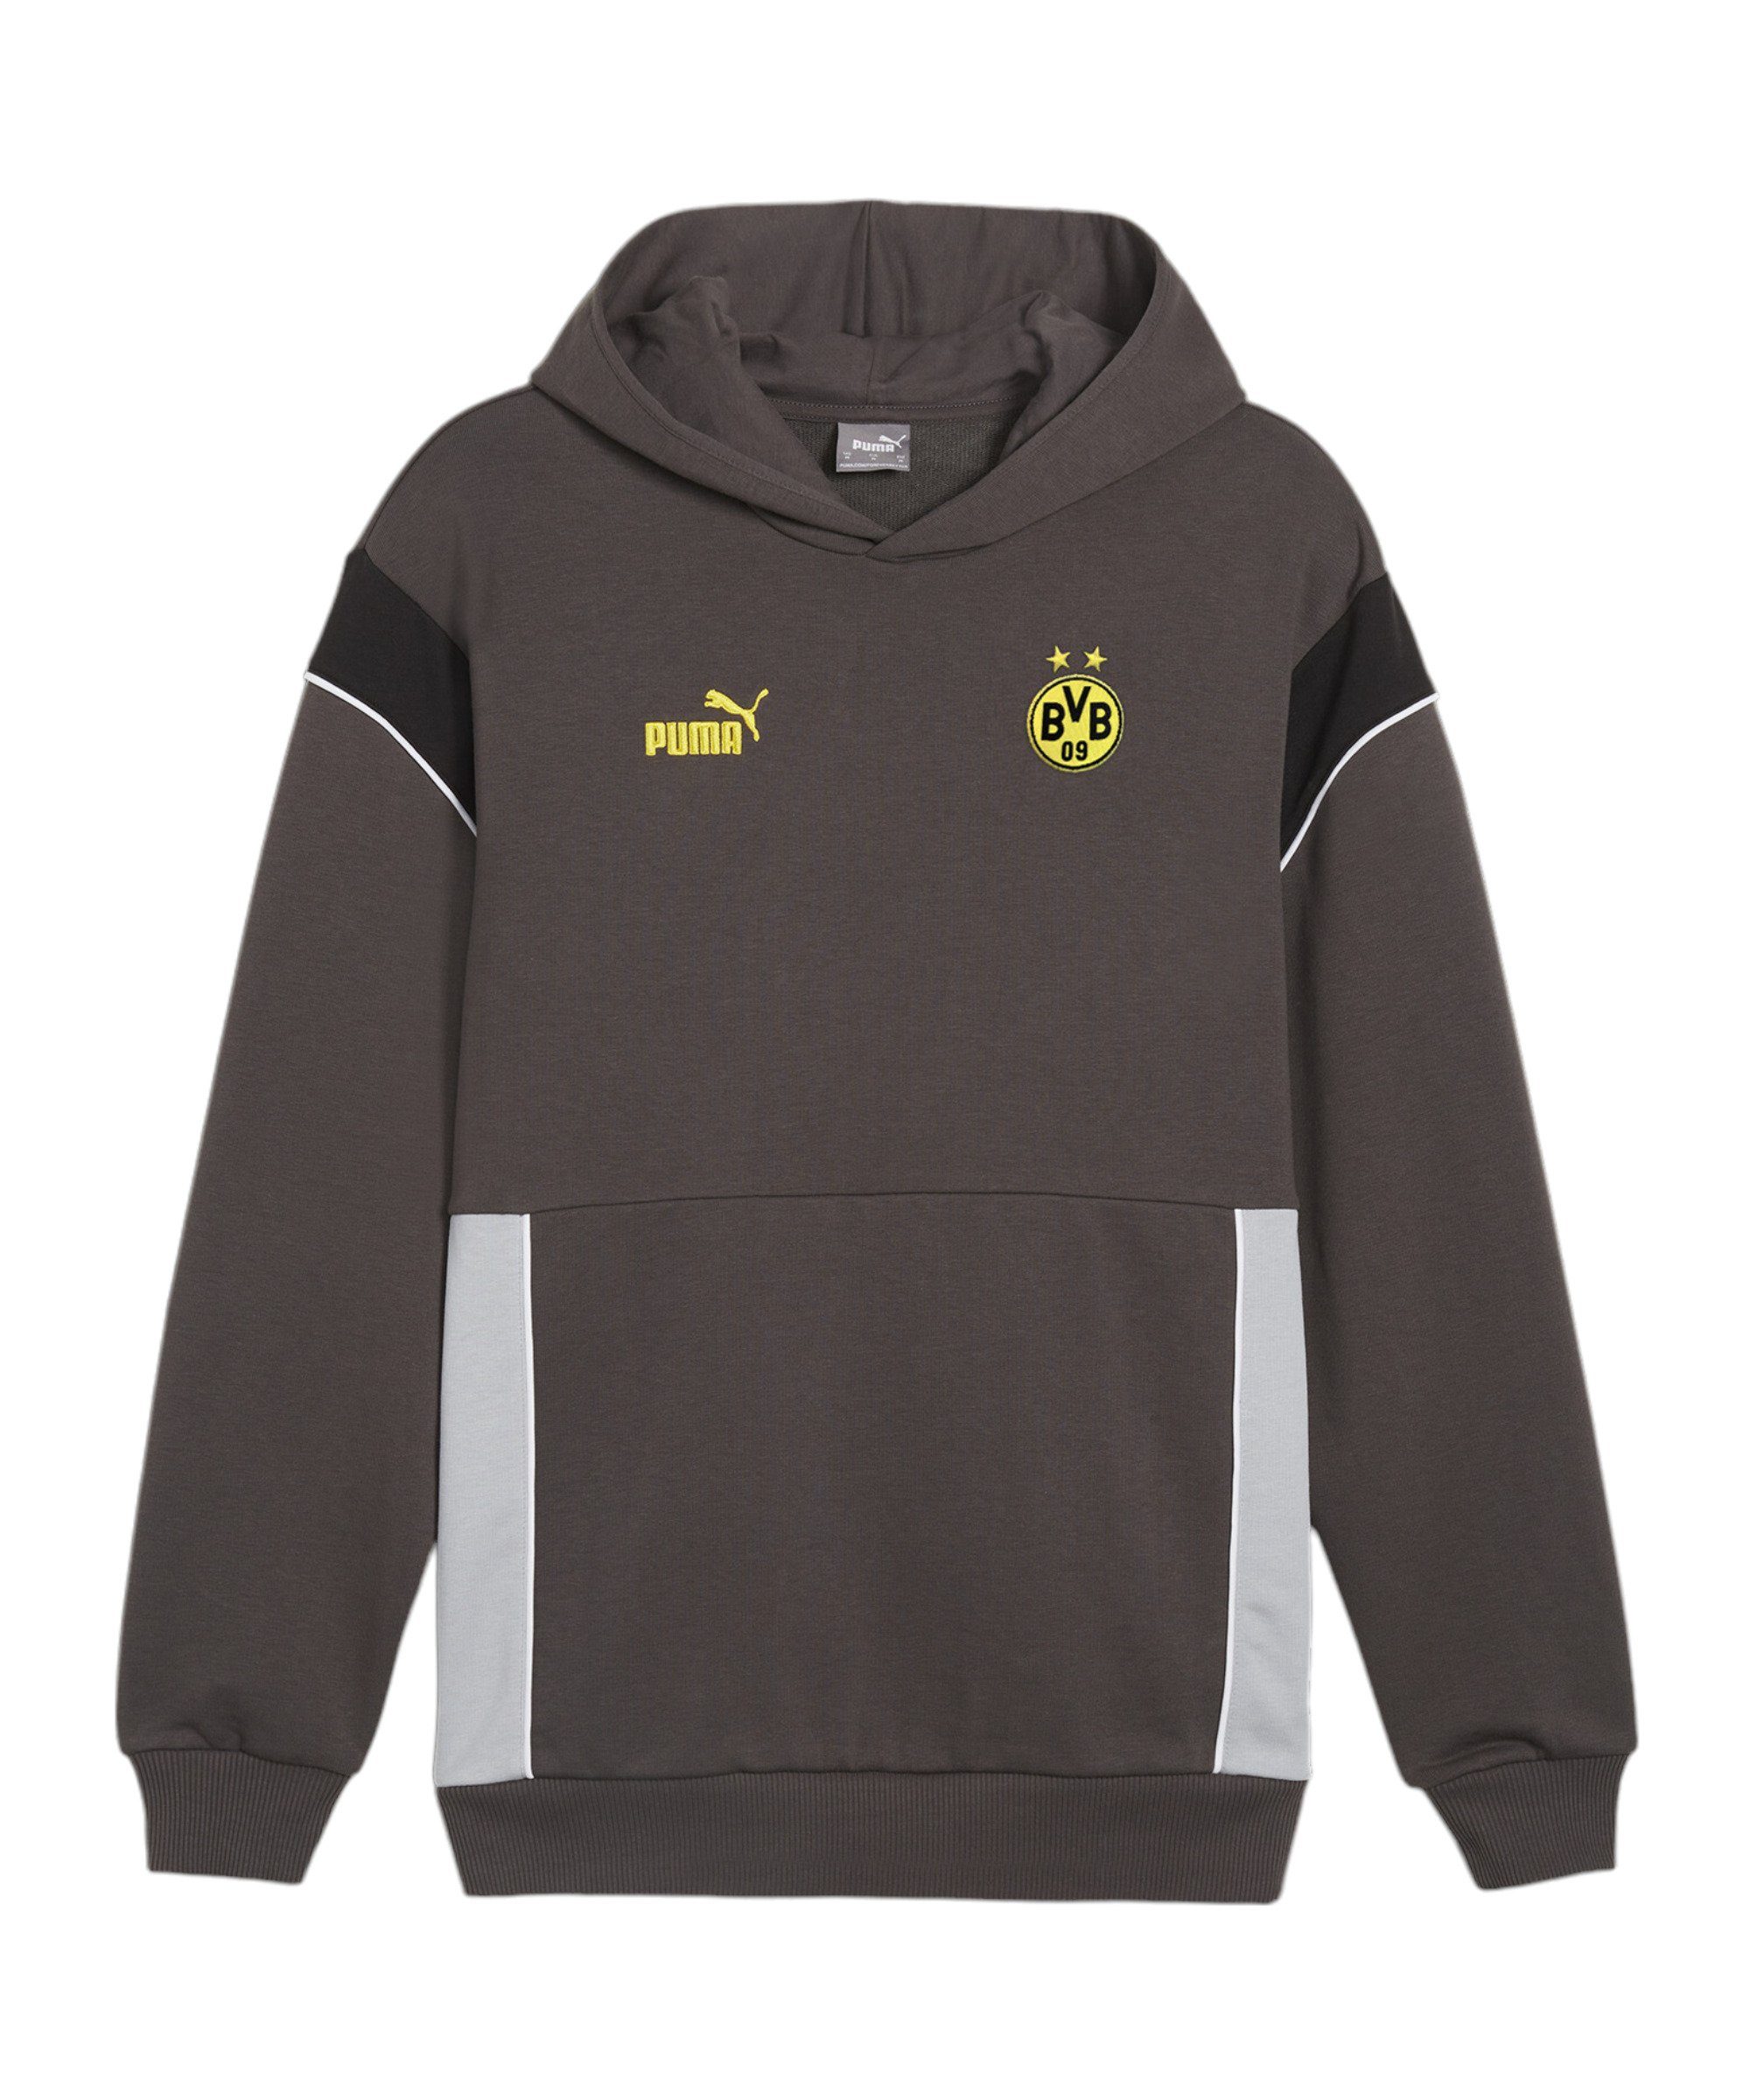 PUMA Sweatshirt BVB Dortmund Ftbl Archive Hoody